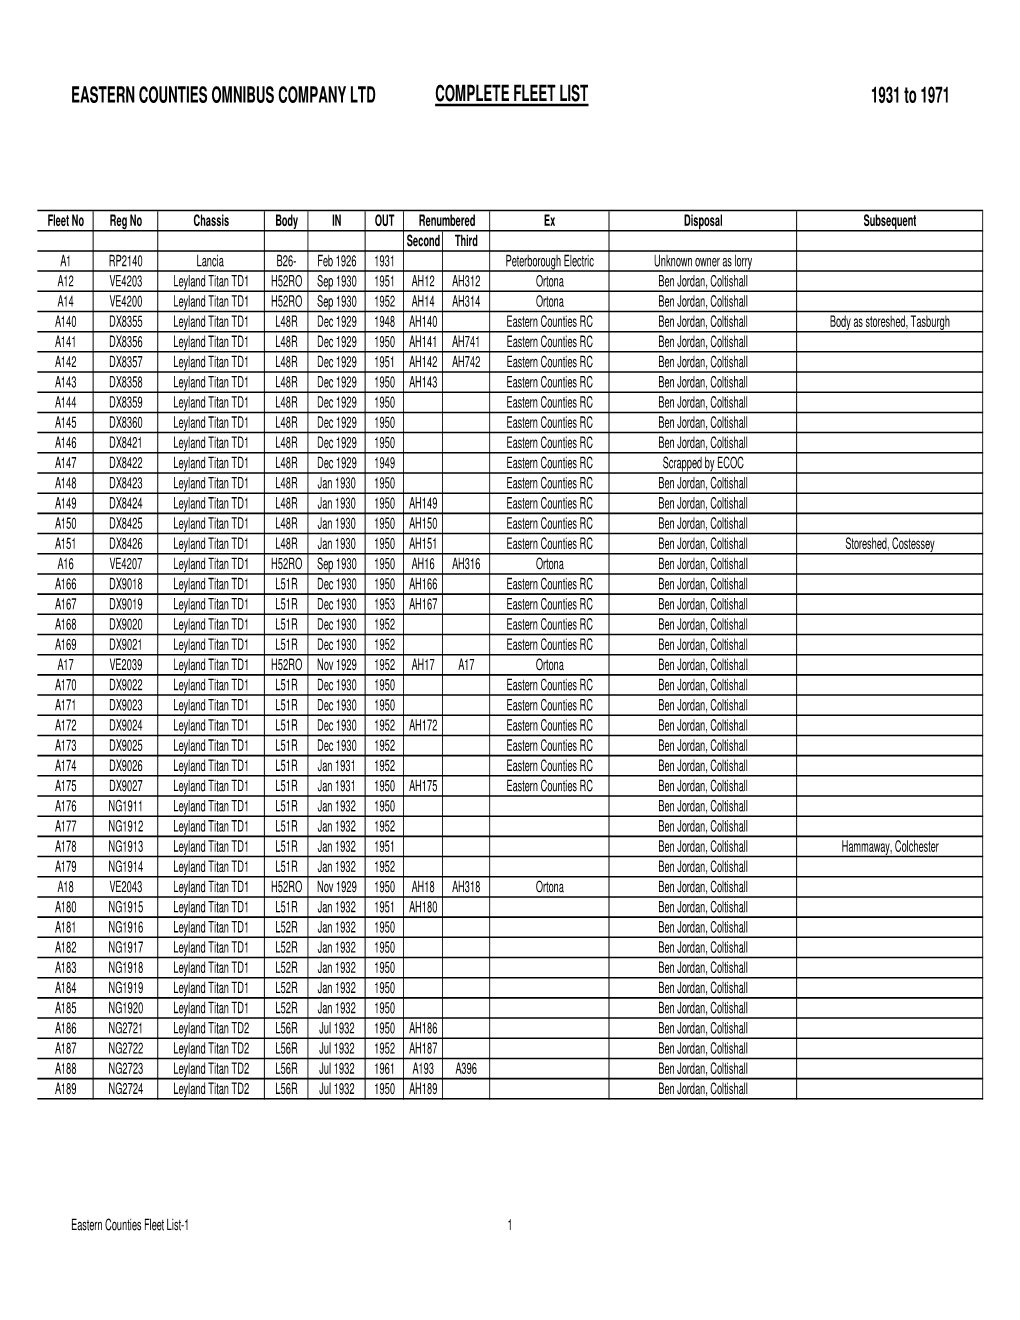 Eastern Counties Fleet List-1 1 EASTERN COUNTIES OMNIBUS COMPANY LTD COMPLETE FLEET LIST 1931 to 1971